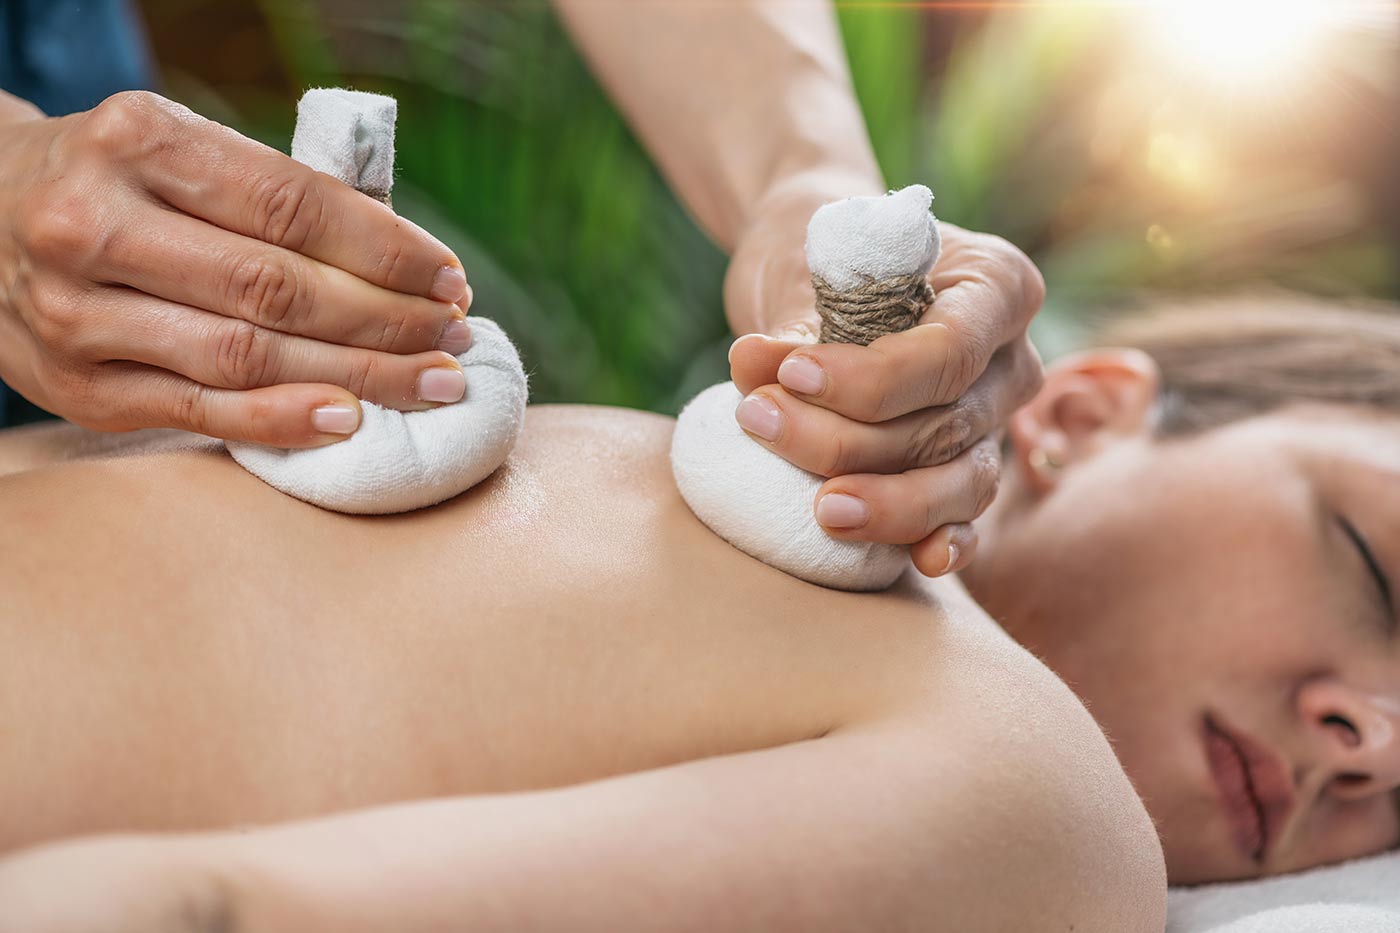 Ayurvedic Massage Therapist Wishart – Ayurvedic Massage makes use of the natural healing properties of herbs and oils to increase the benefits.